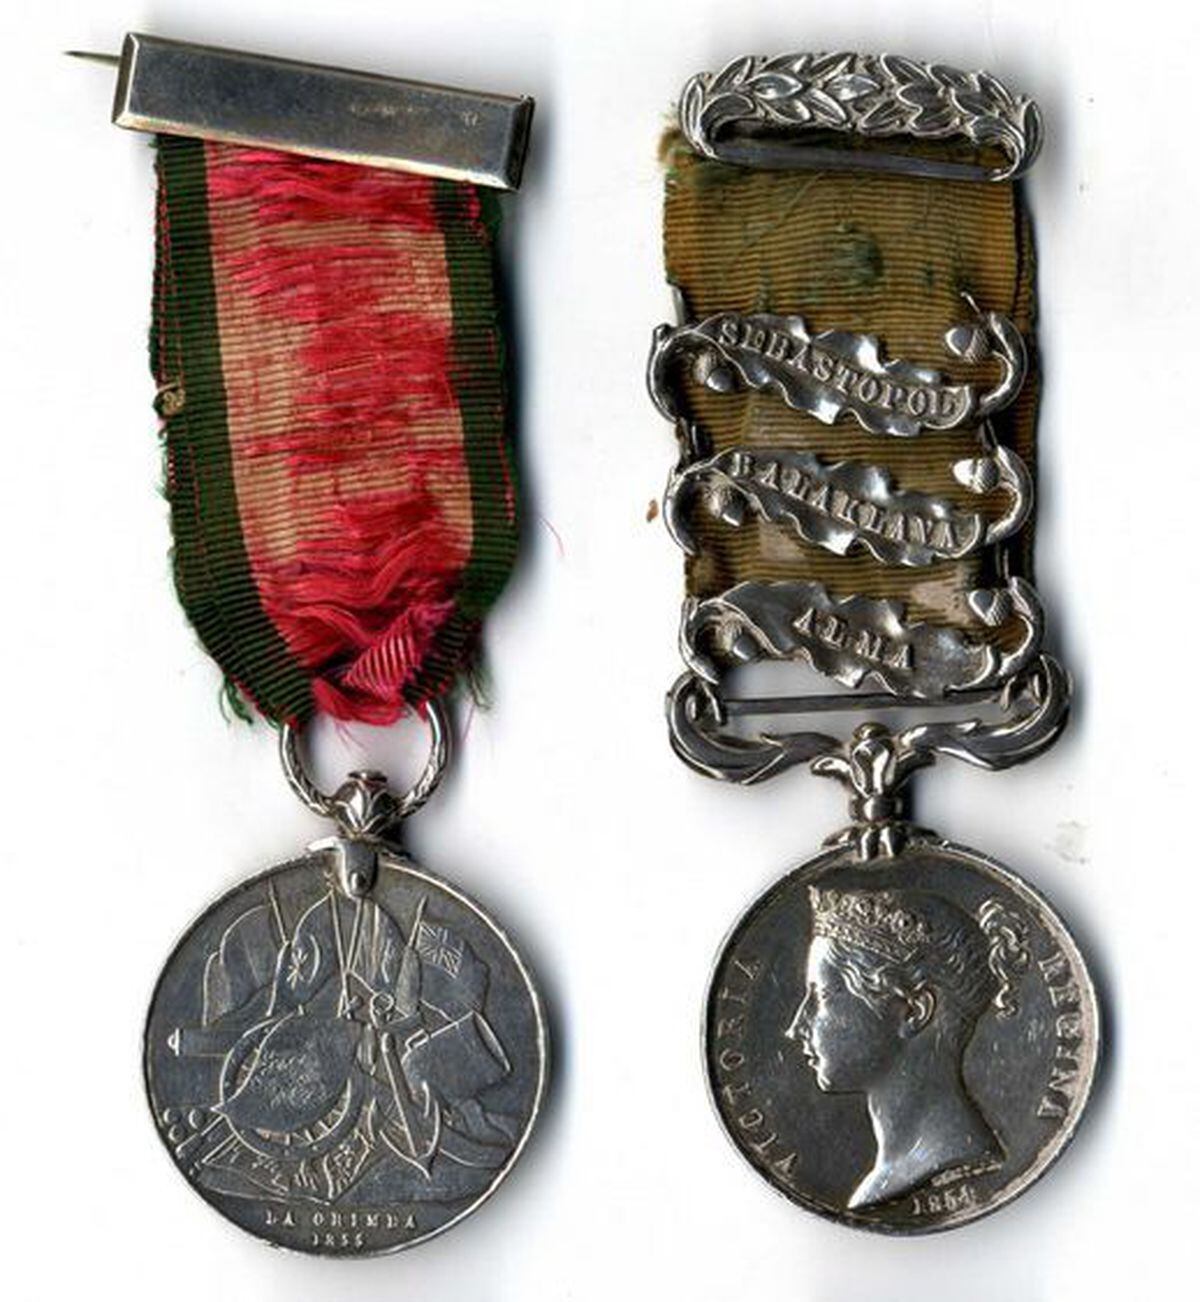 John Ashley Kilvert's medals